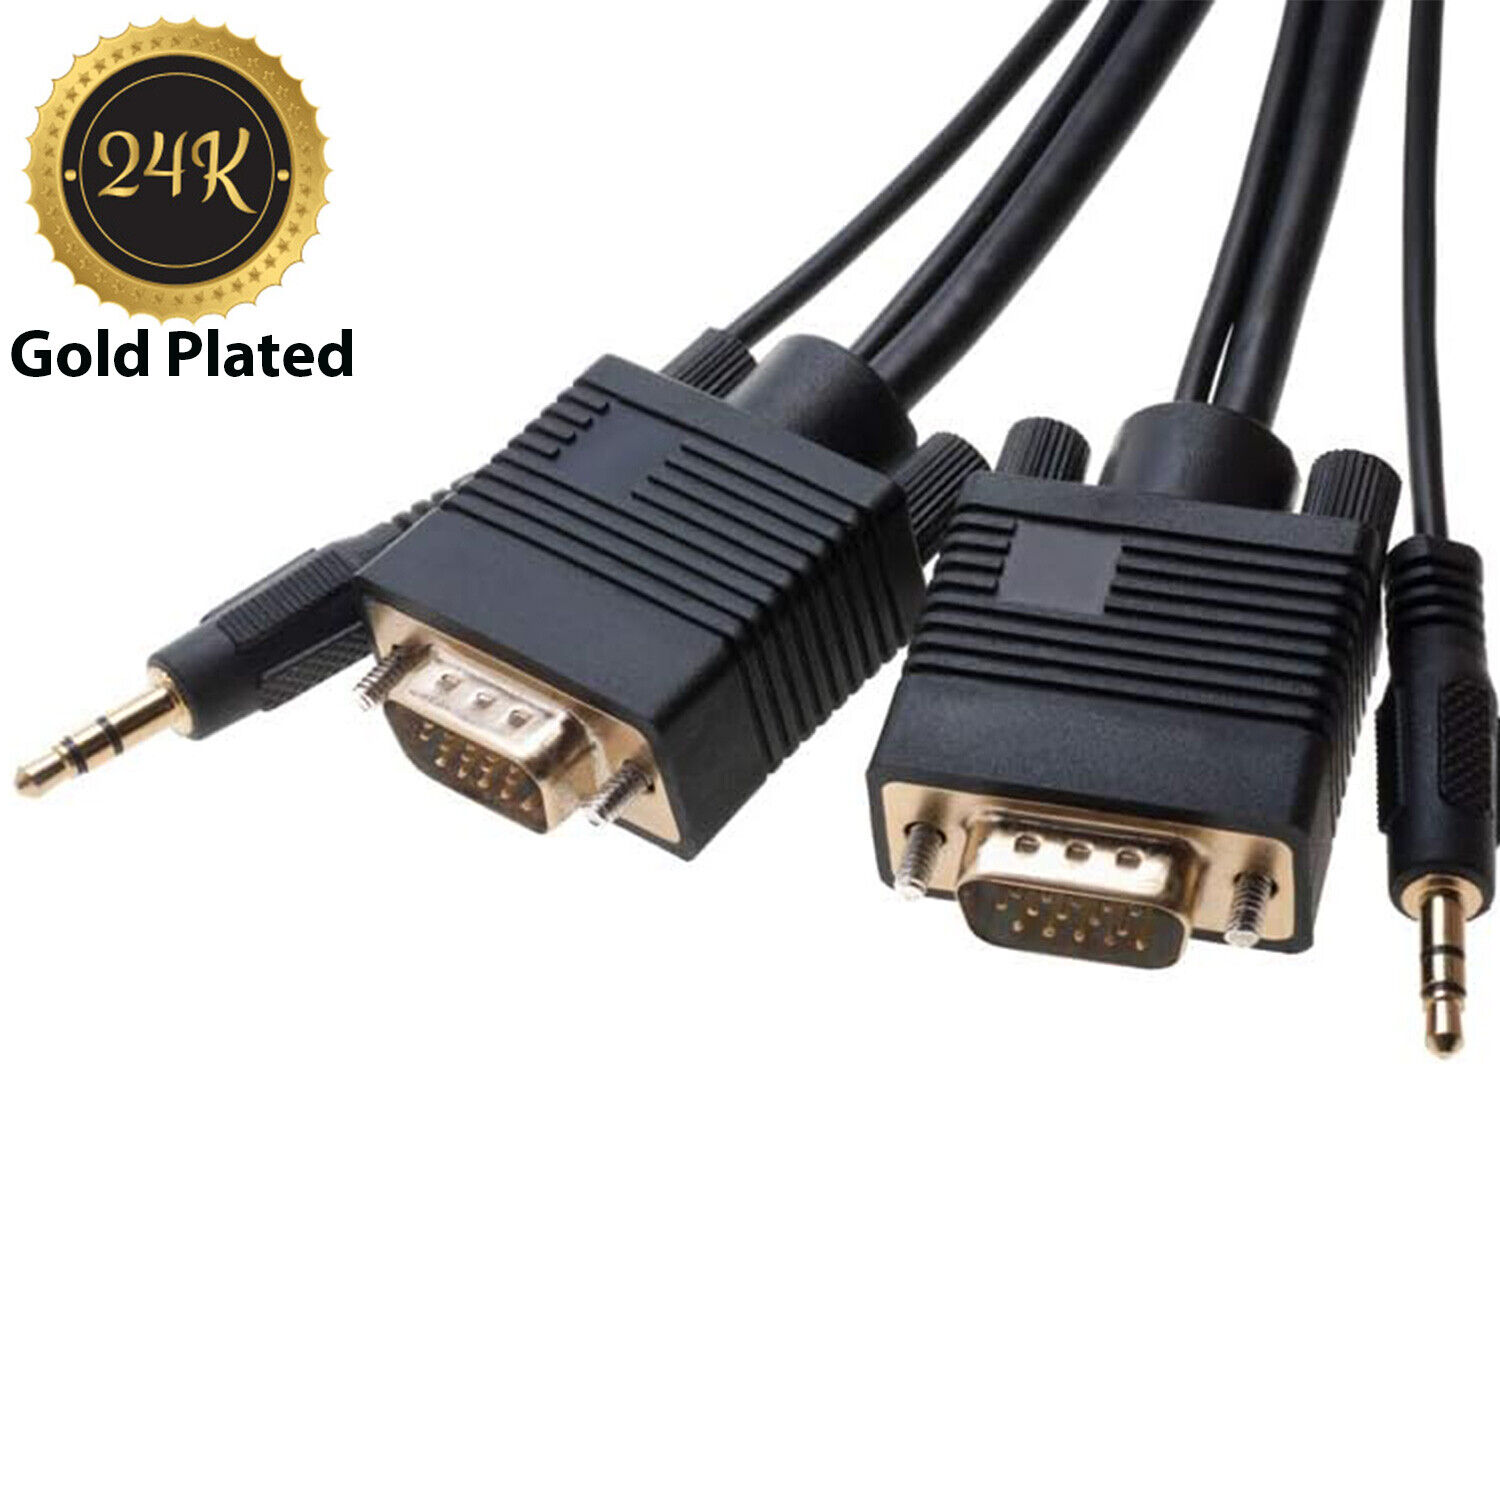 SVGA Super VGA 3.5mm Aux Cable Audio Video Male to Male Monitor 15 Pin Cord lot